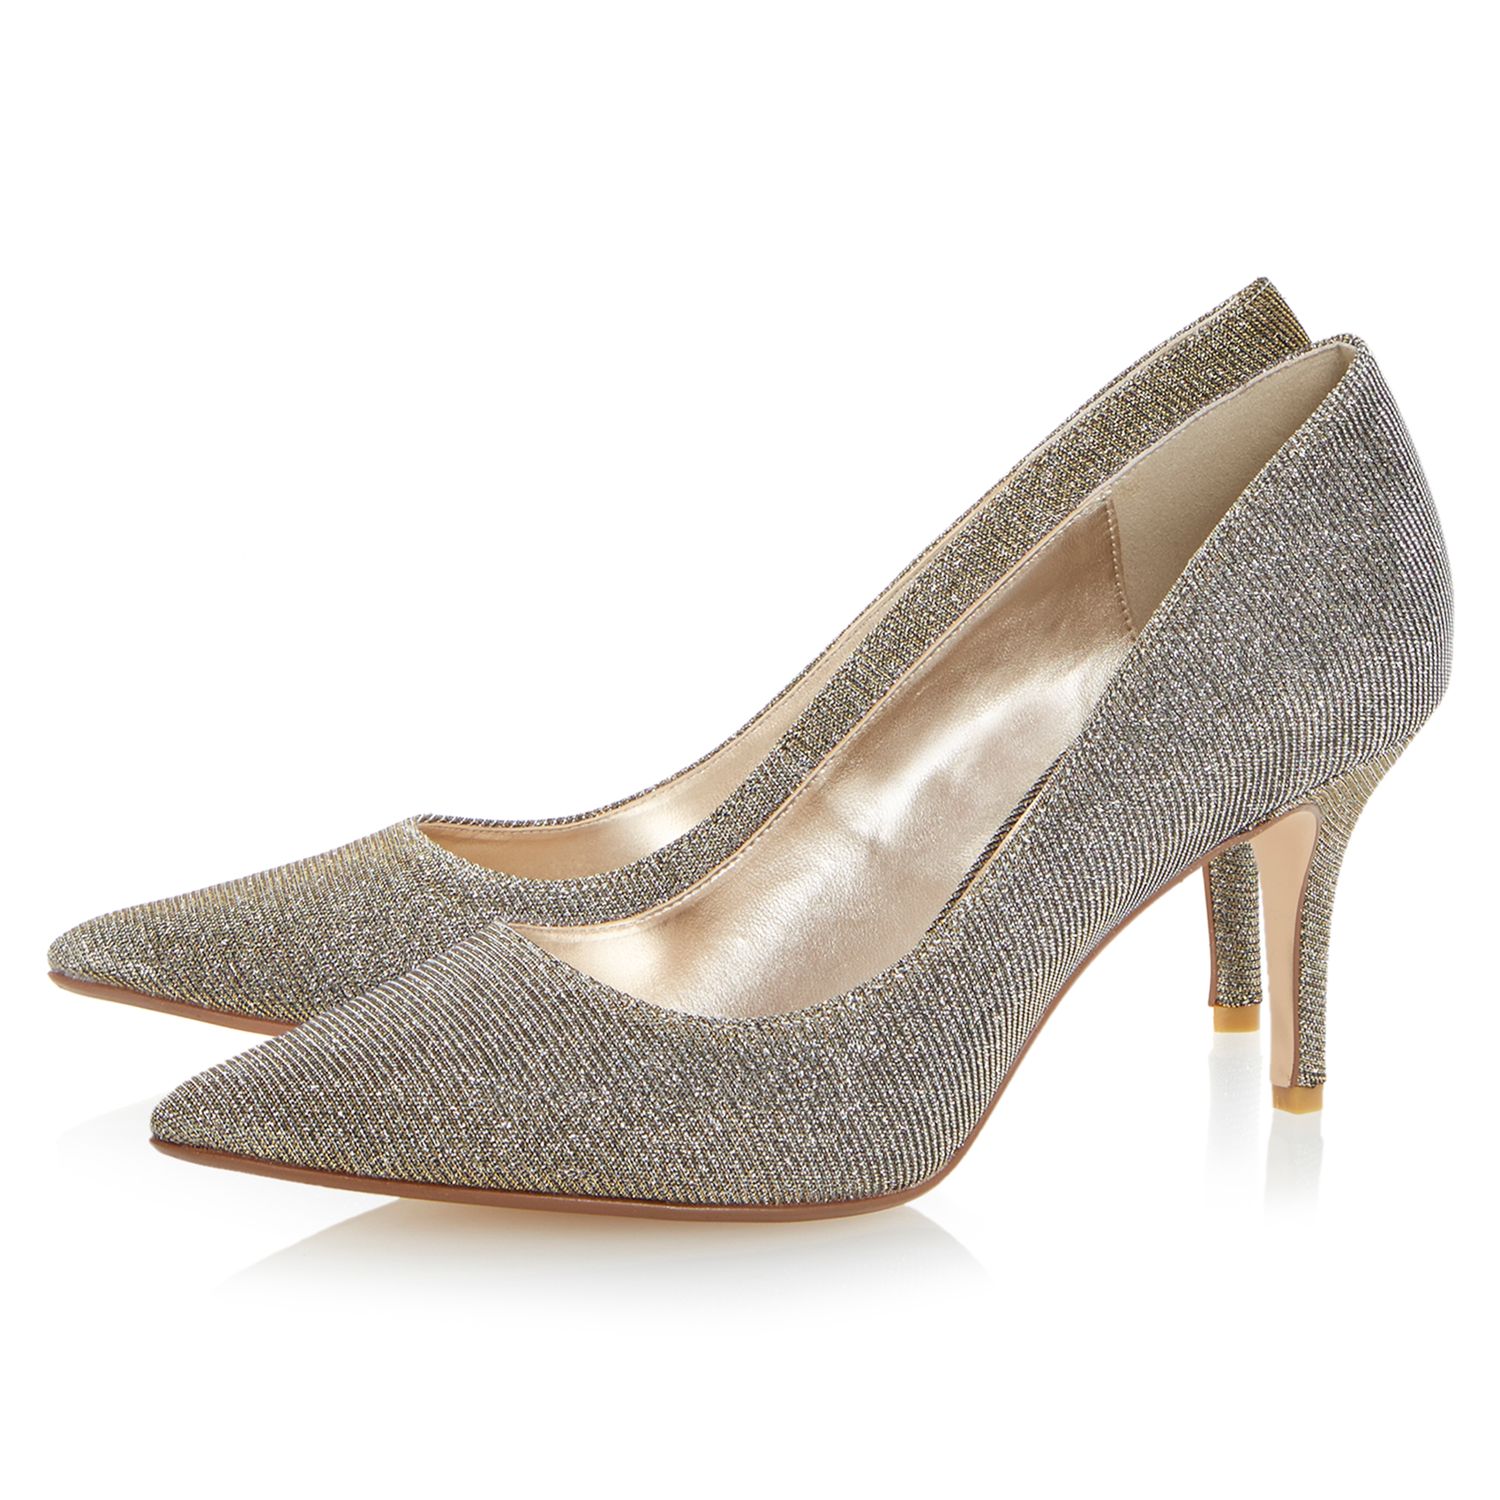 Dune Alina Stiletto Heeled Court Shoes, Metallic Gold, 4